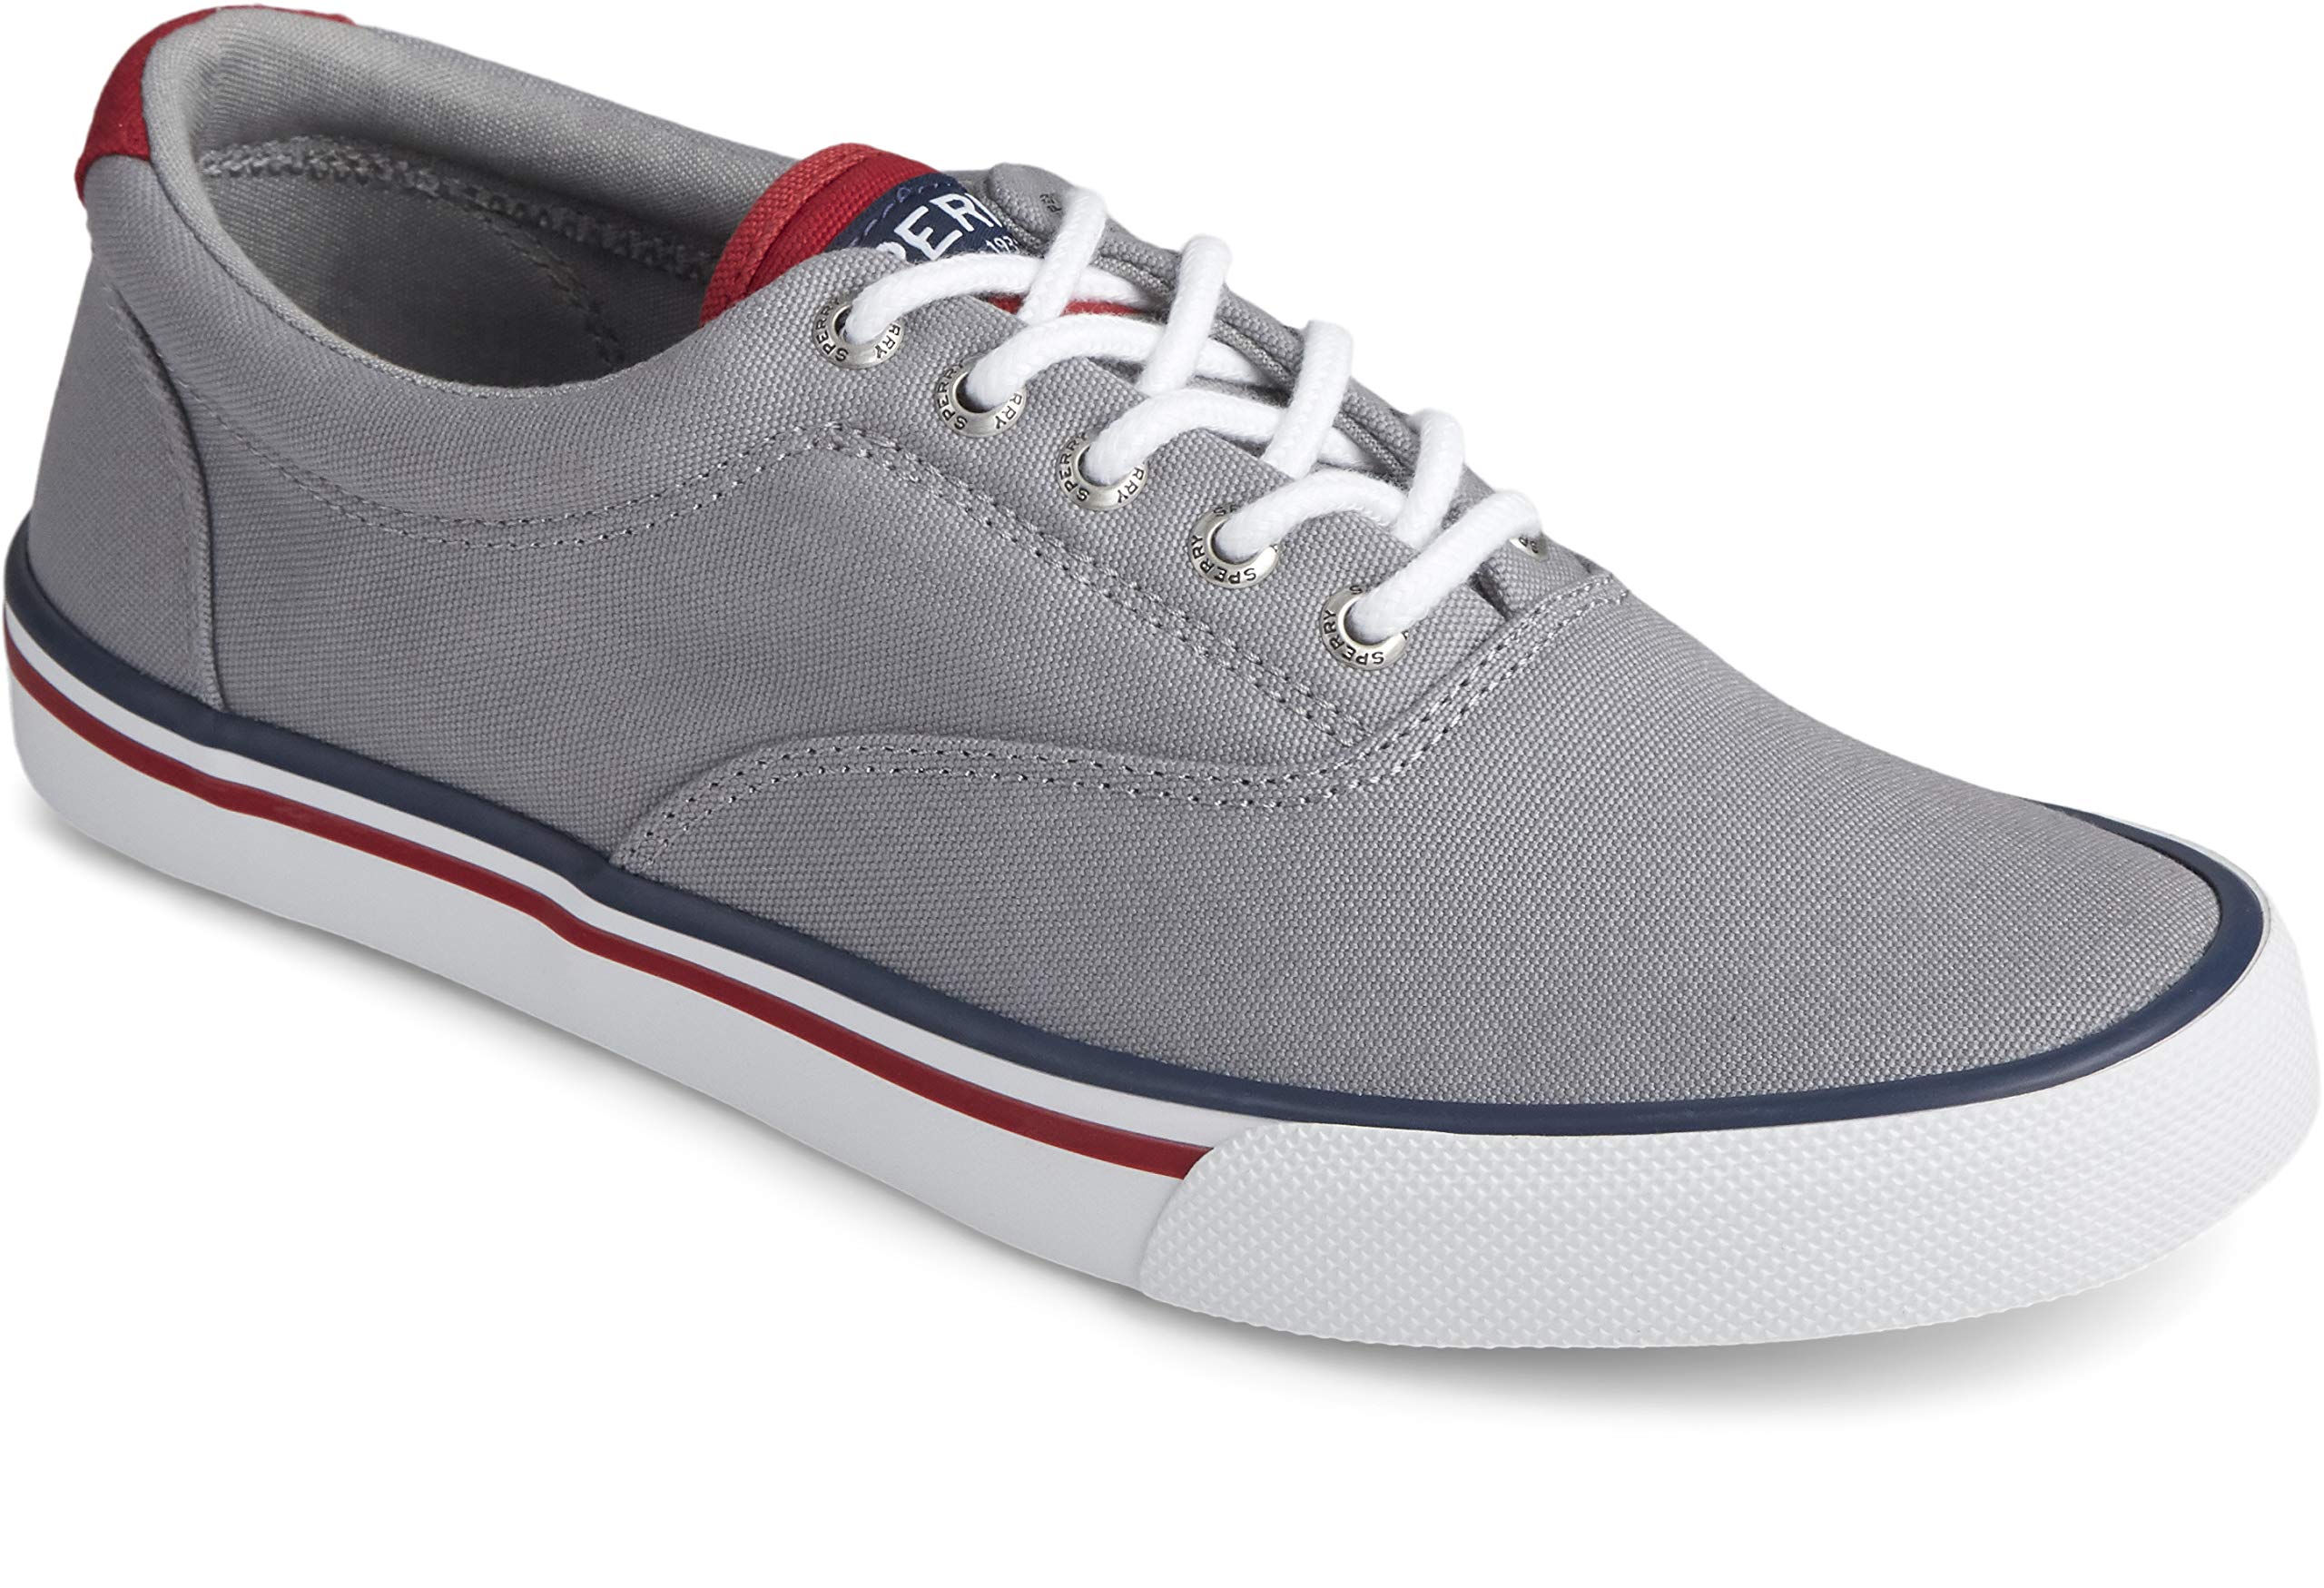 Sperry Mens Striper II CVO Nautical Sneaker - Grey - Size 11.5